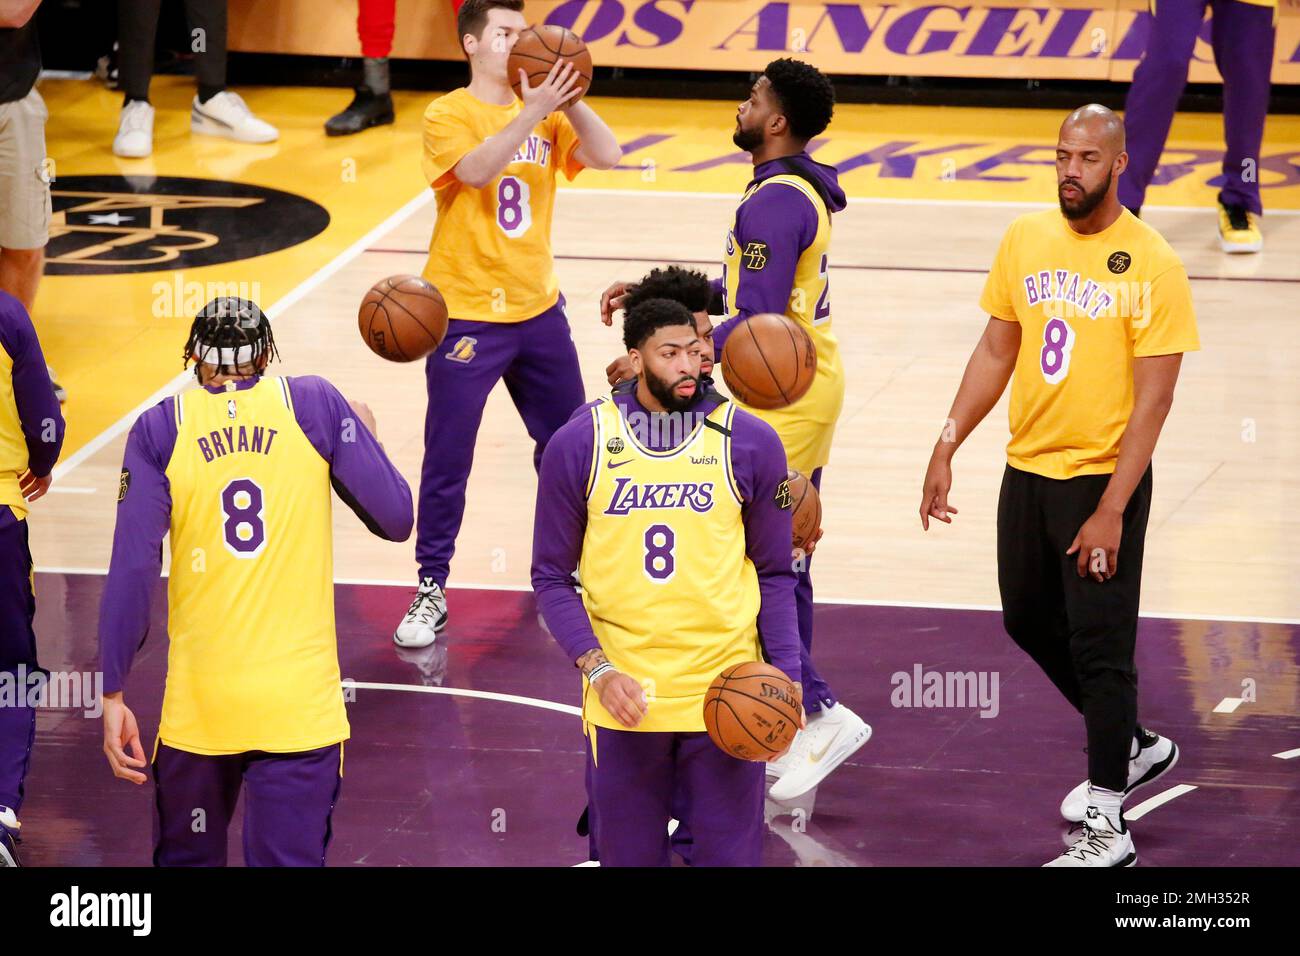 Photos: Lakers vs. Blazers Game 4 (8/24/20) Photo Gallery